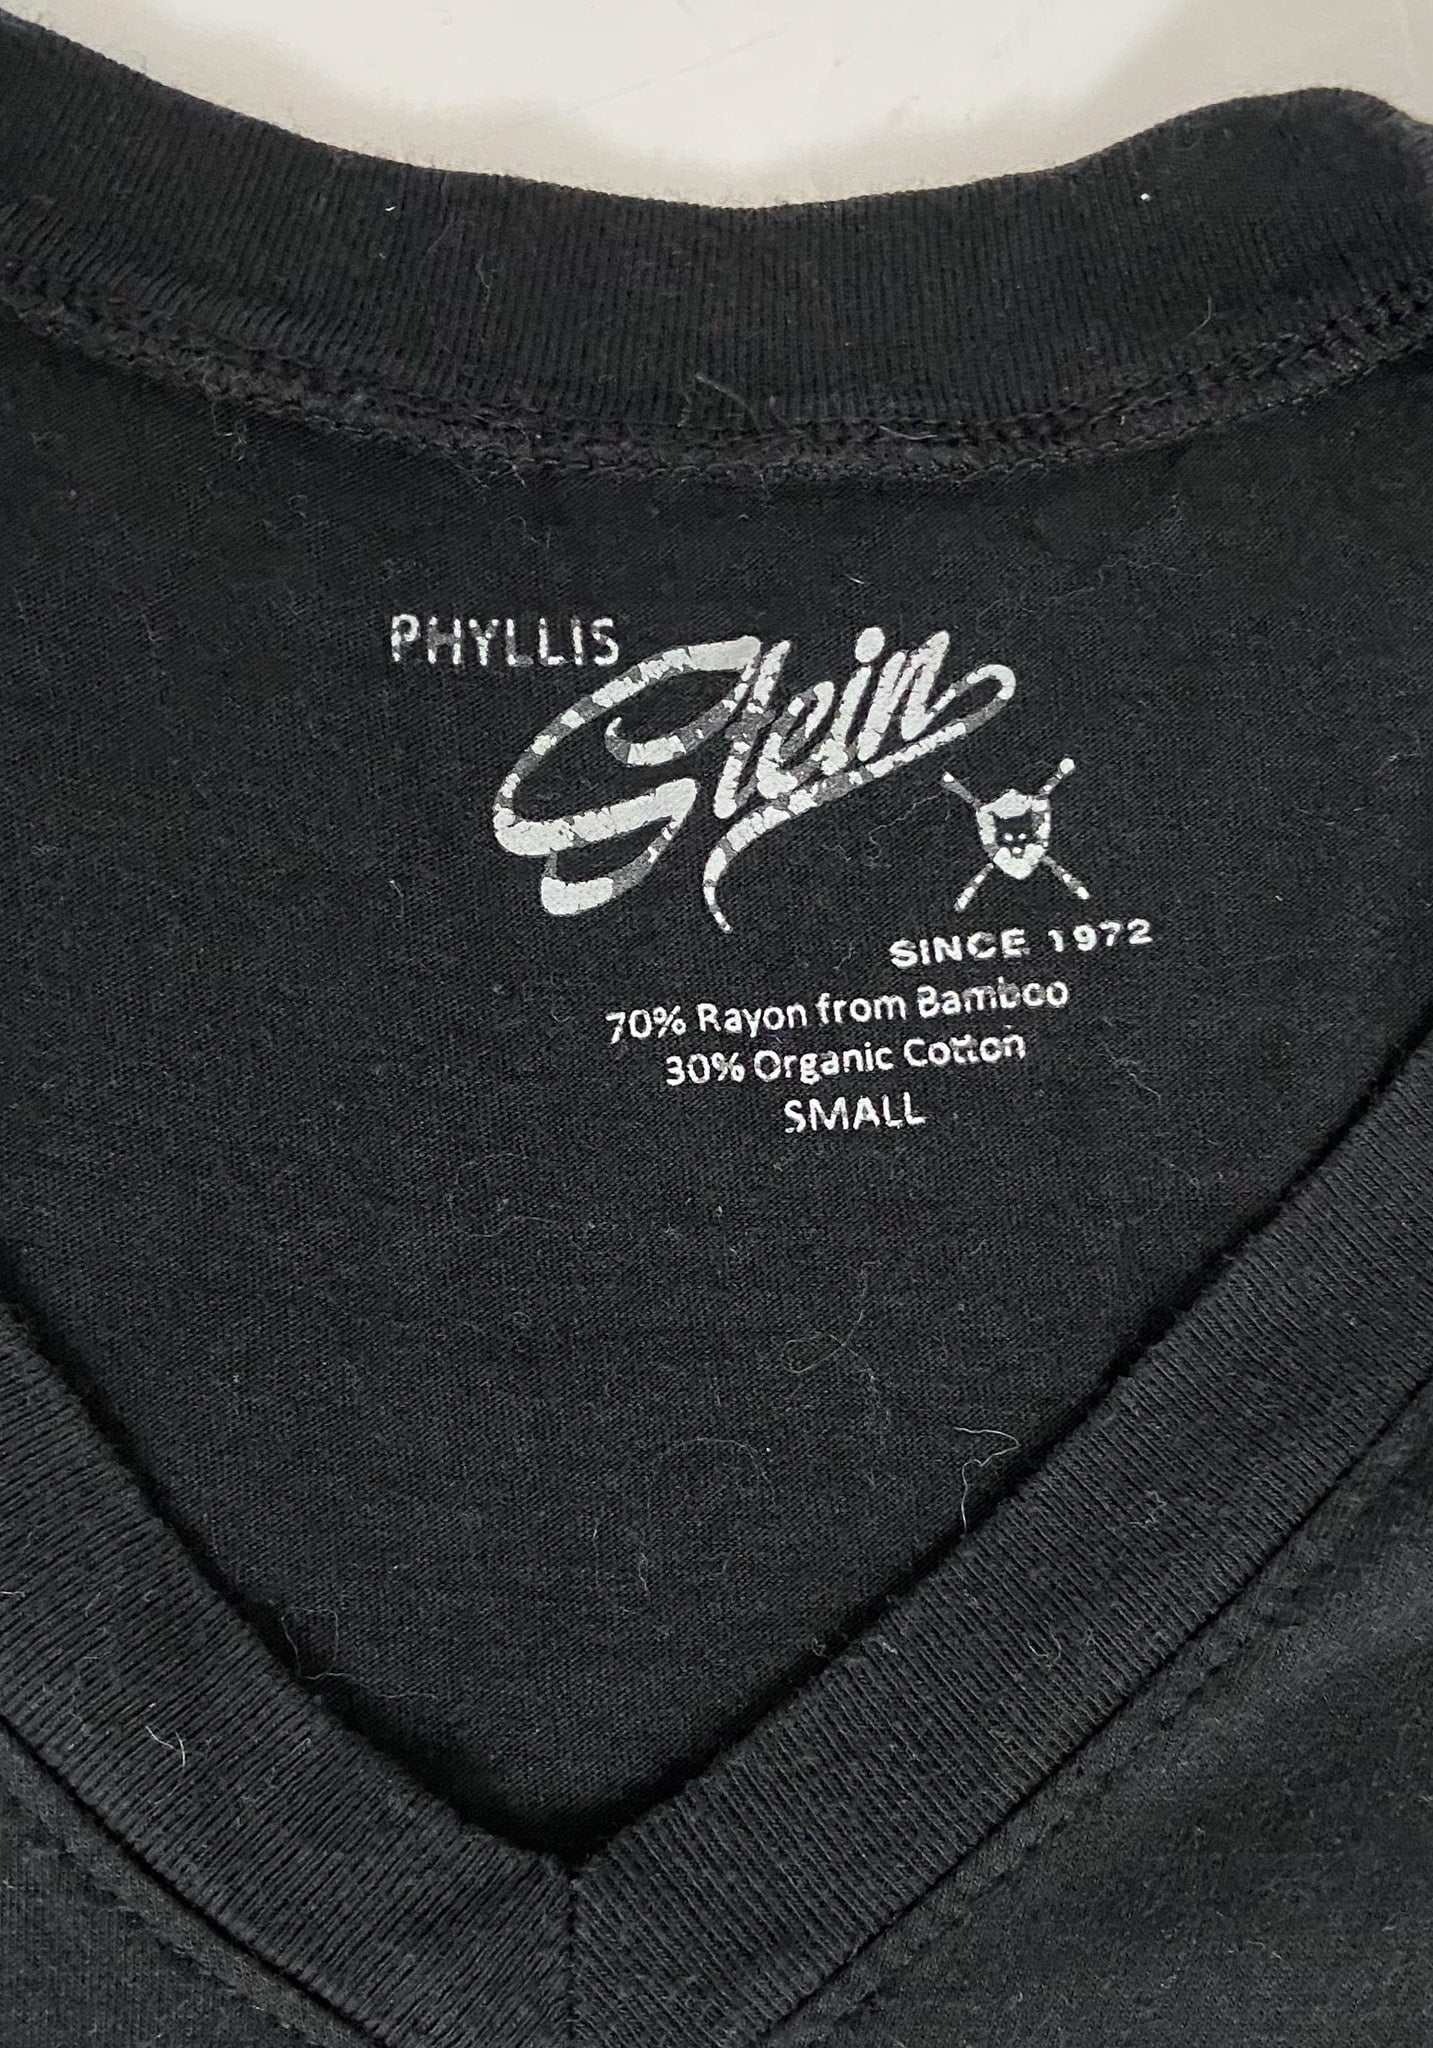 Phyllis Stein Tee Shirt - Black - Women's Small